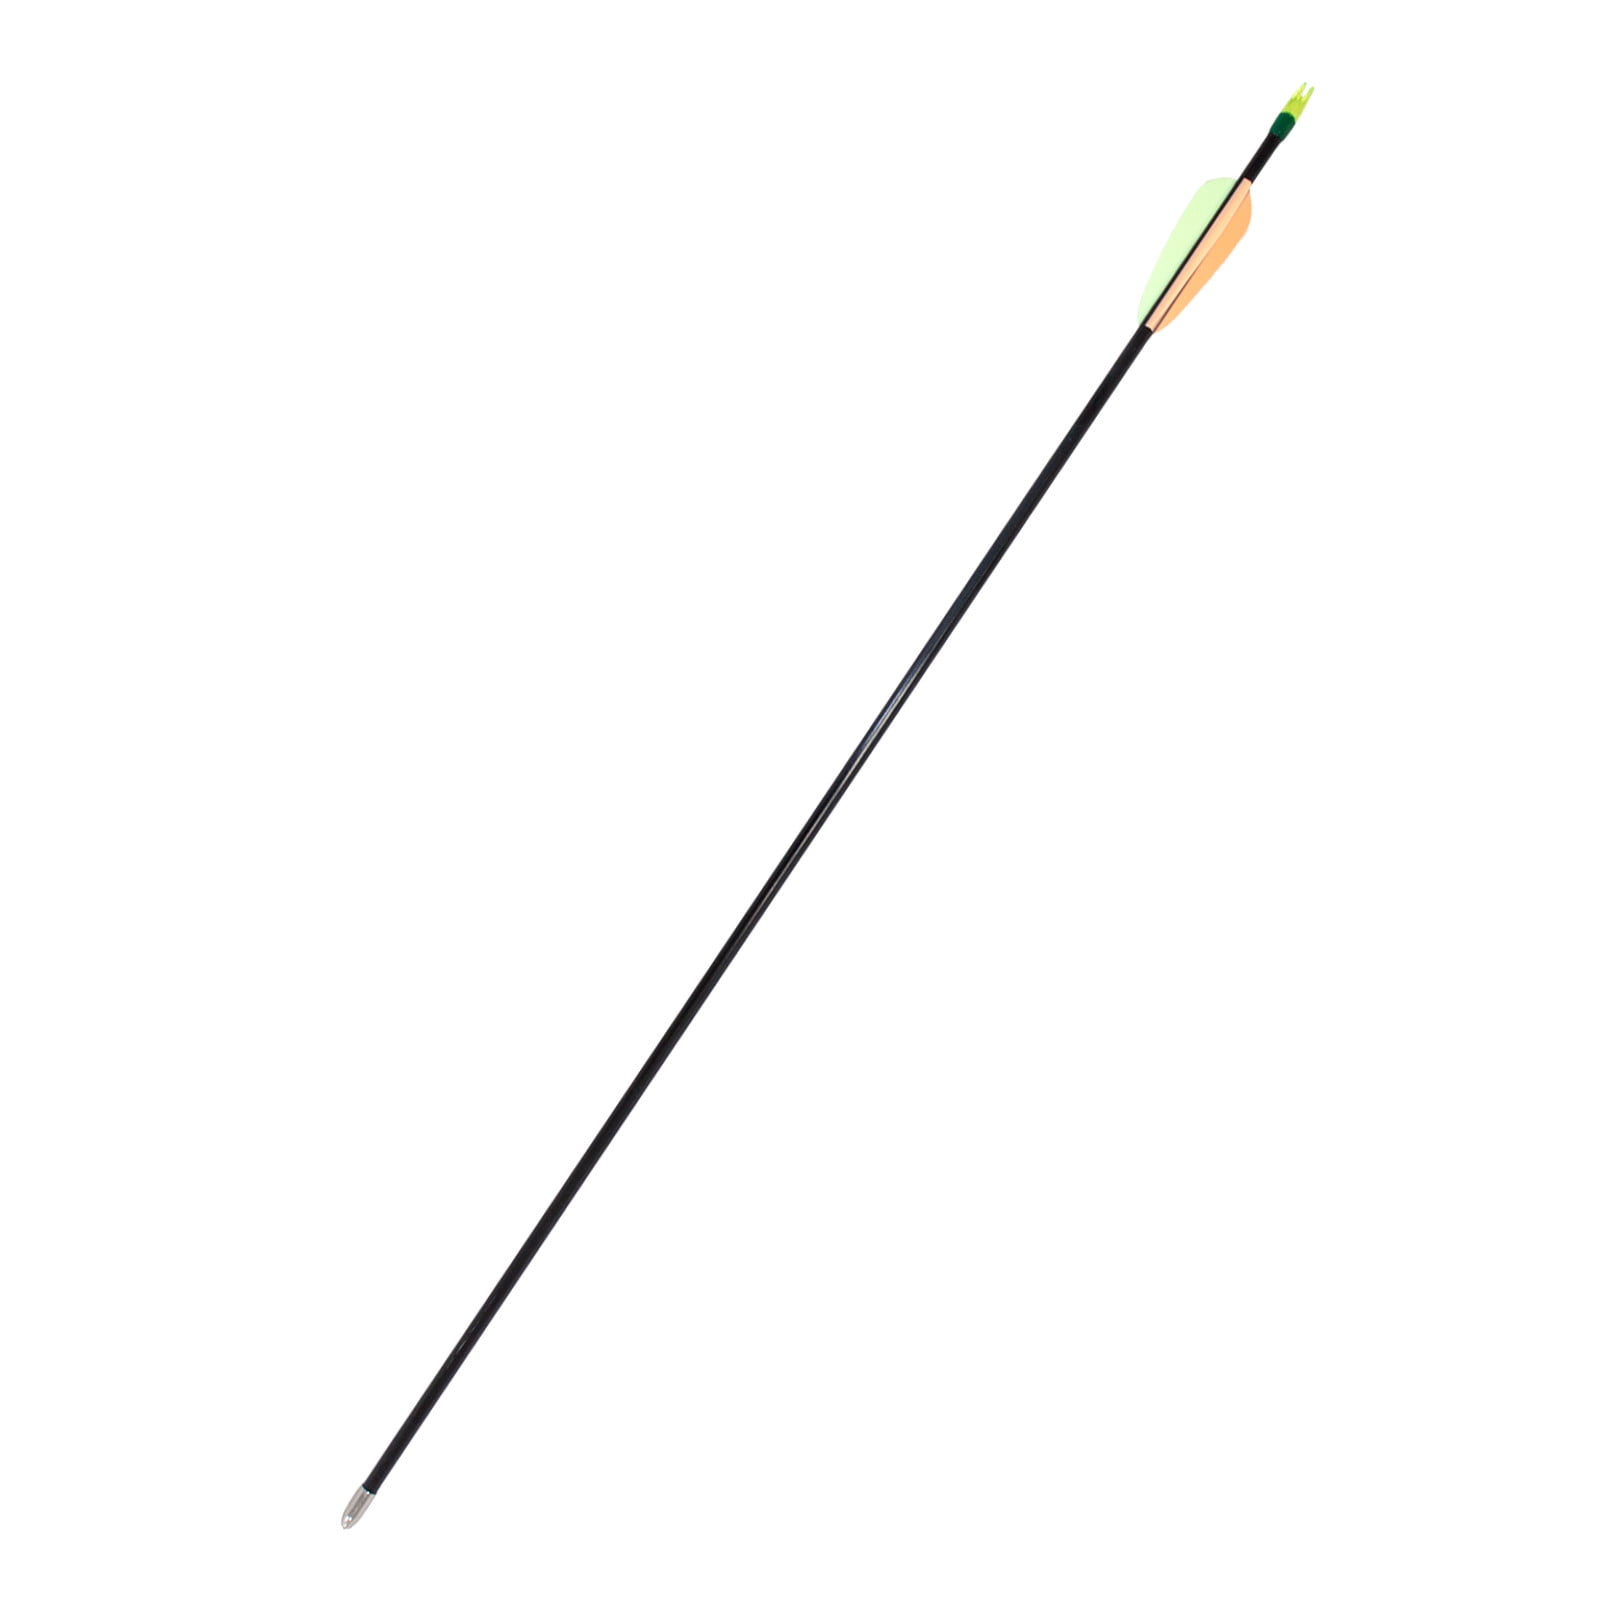 Details about   6/12pcs 16inch Archery Fiberglass Arrows Crossbow Target Hunting Arrows US stock 